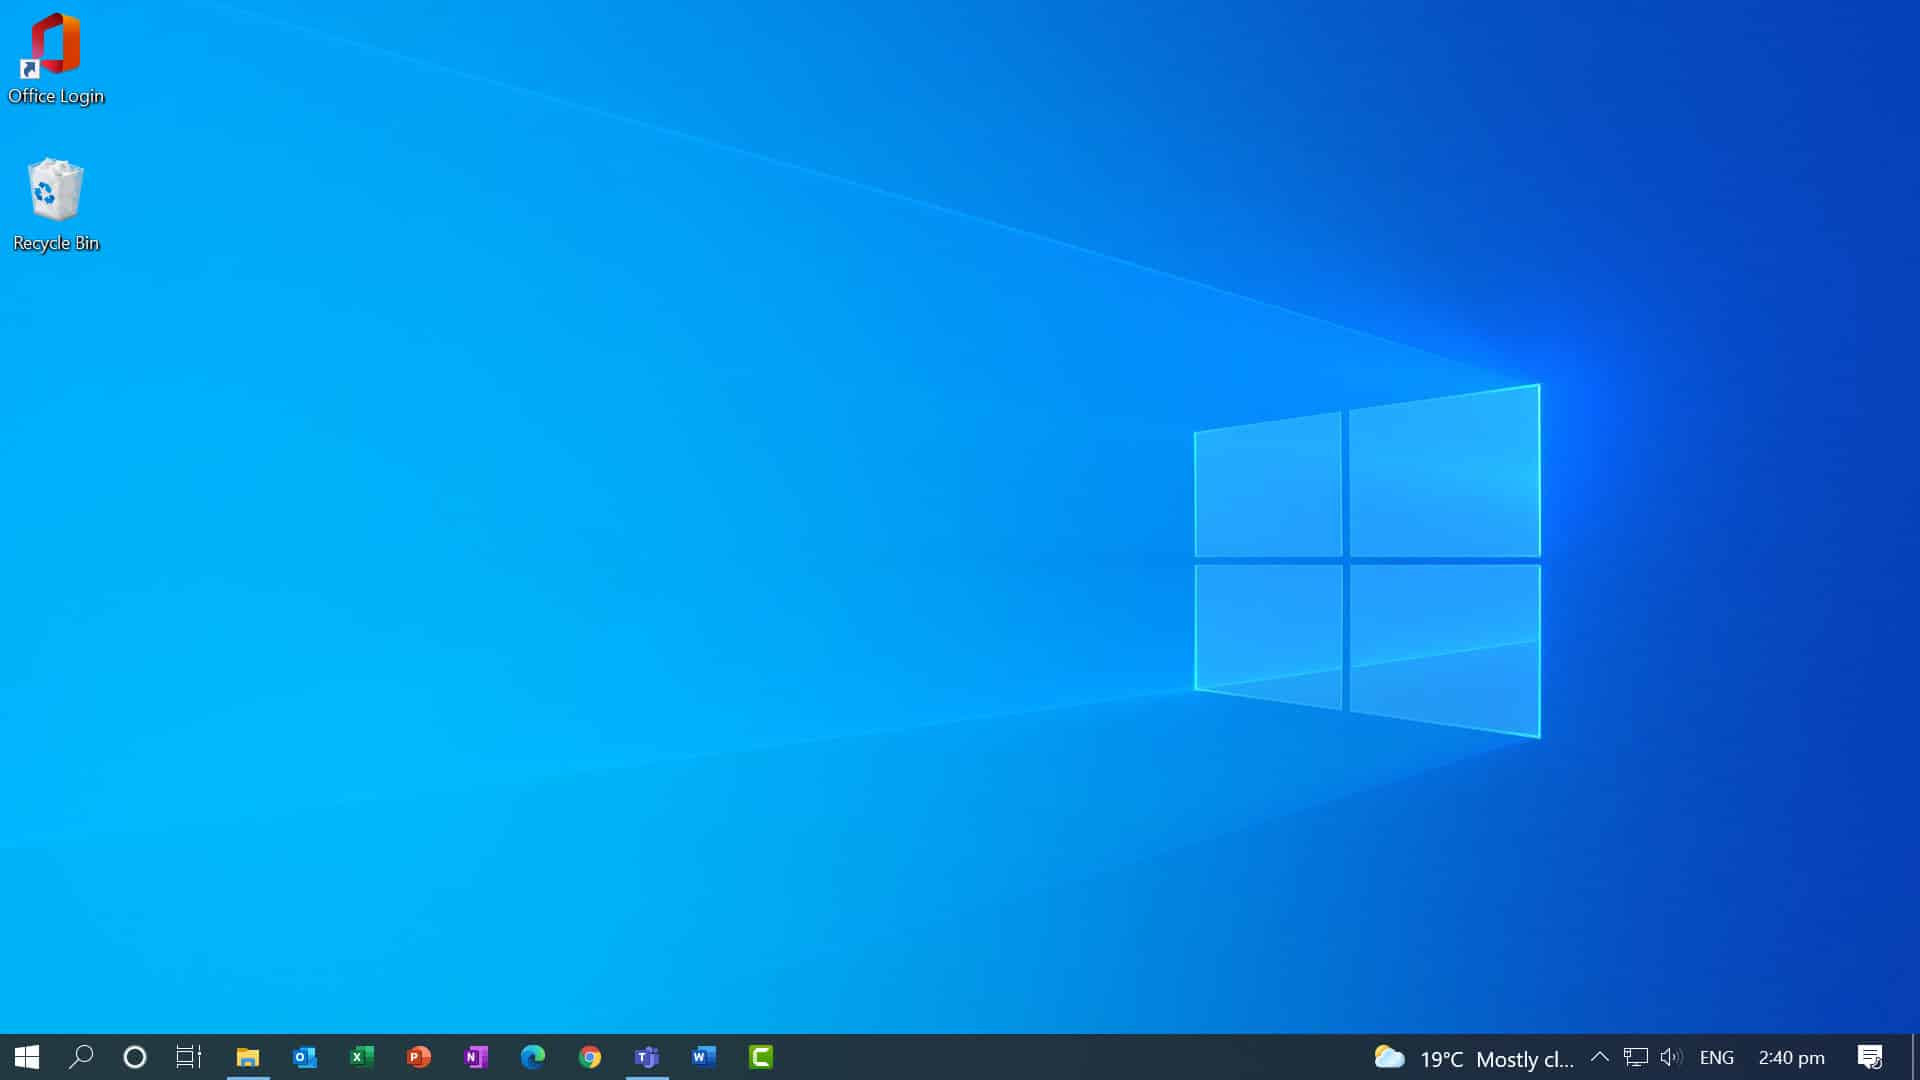 Windows 10 Home screen